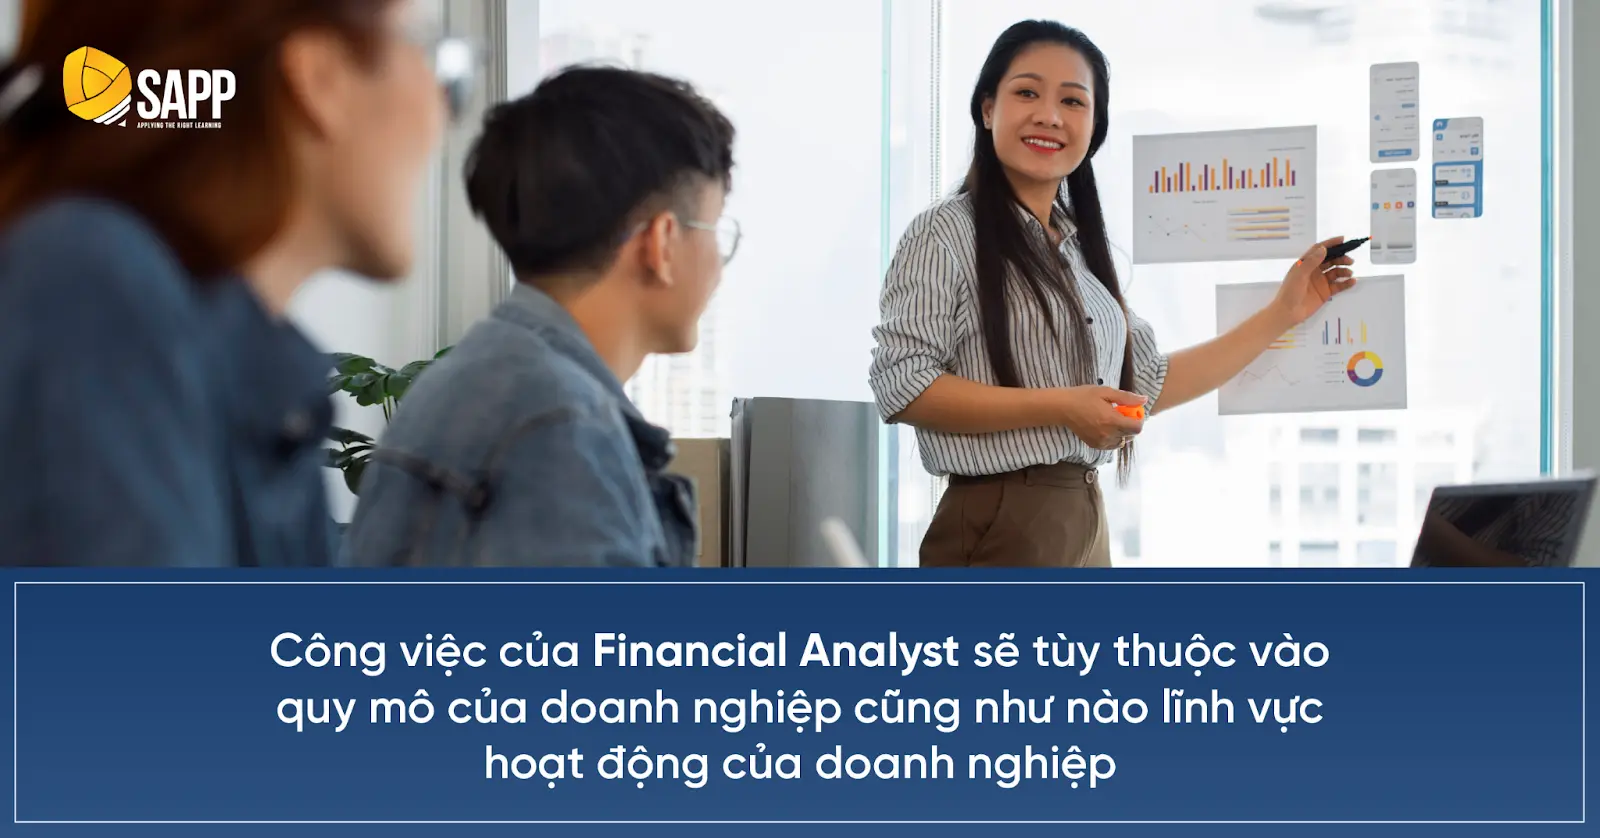 Financial Analyst